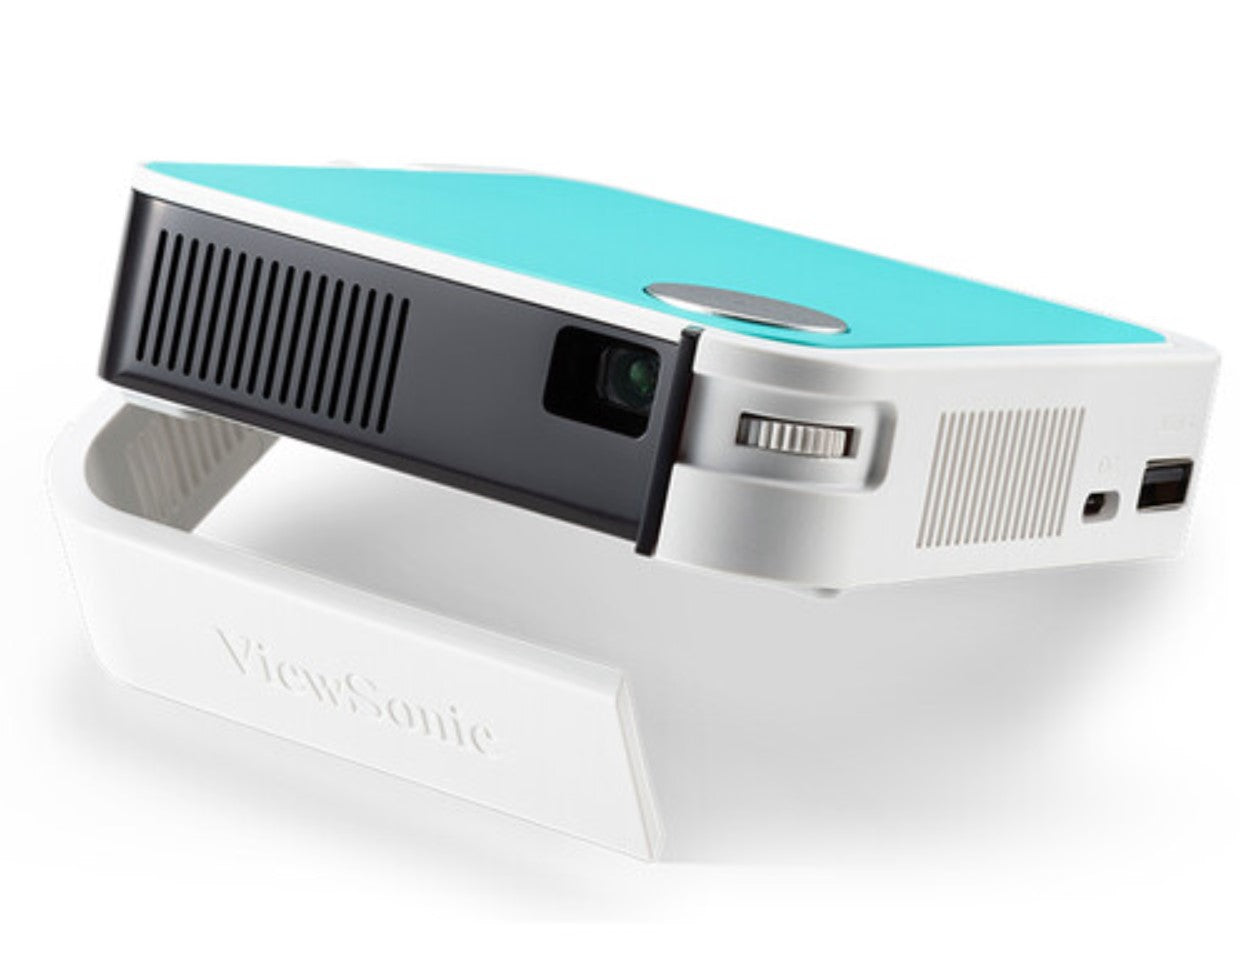 ViewSonic M1MINIPLUS-2-S Portable LED Projector & JBL Speaker - Certified Refurbished